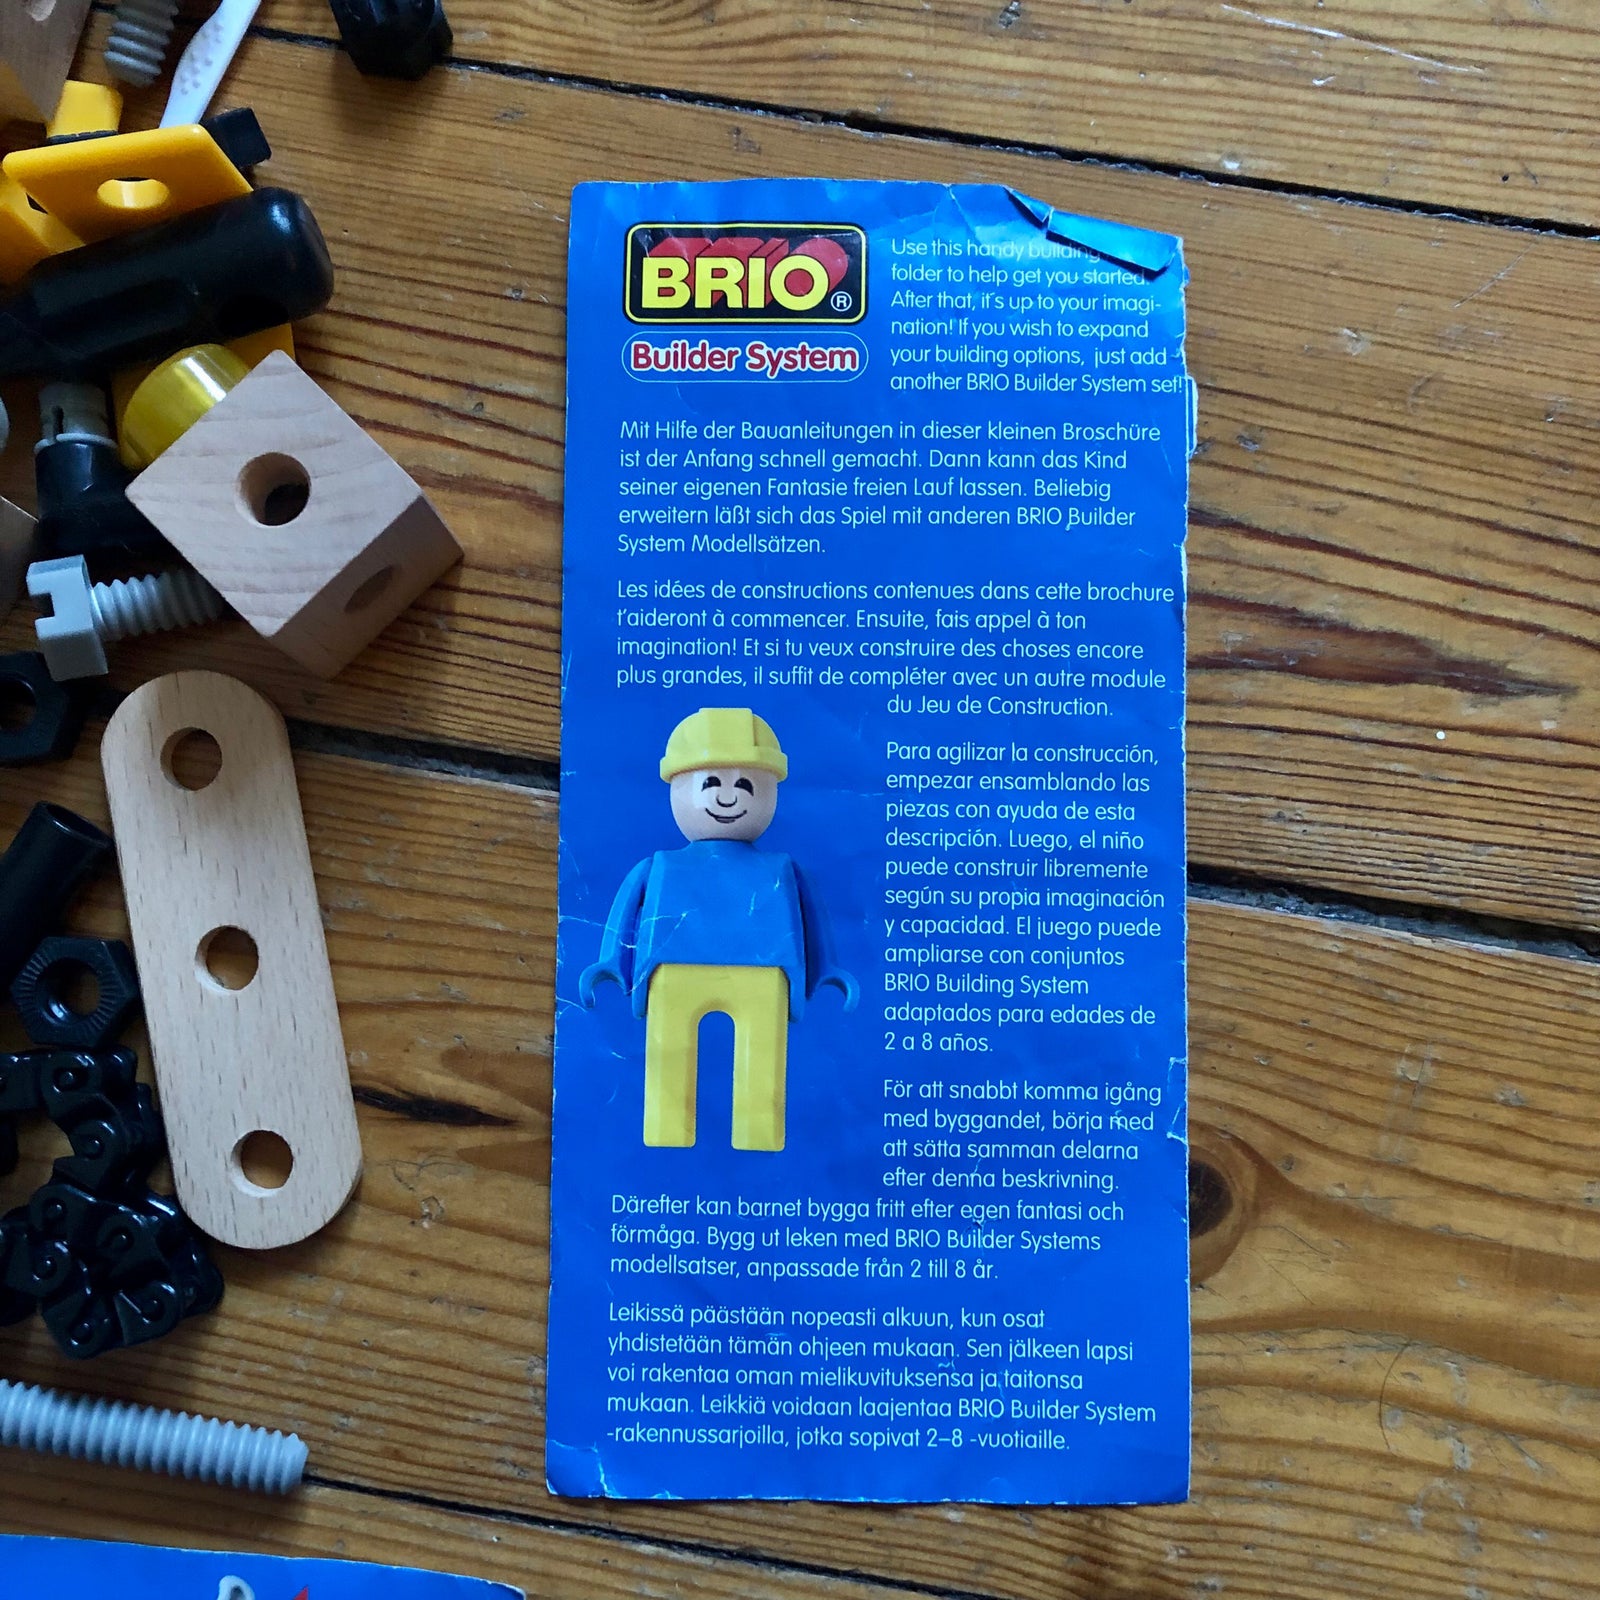 BRIO builder system